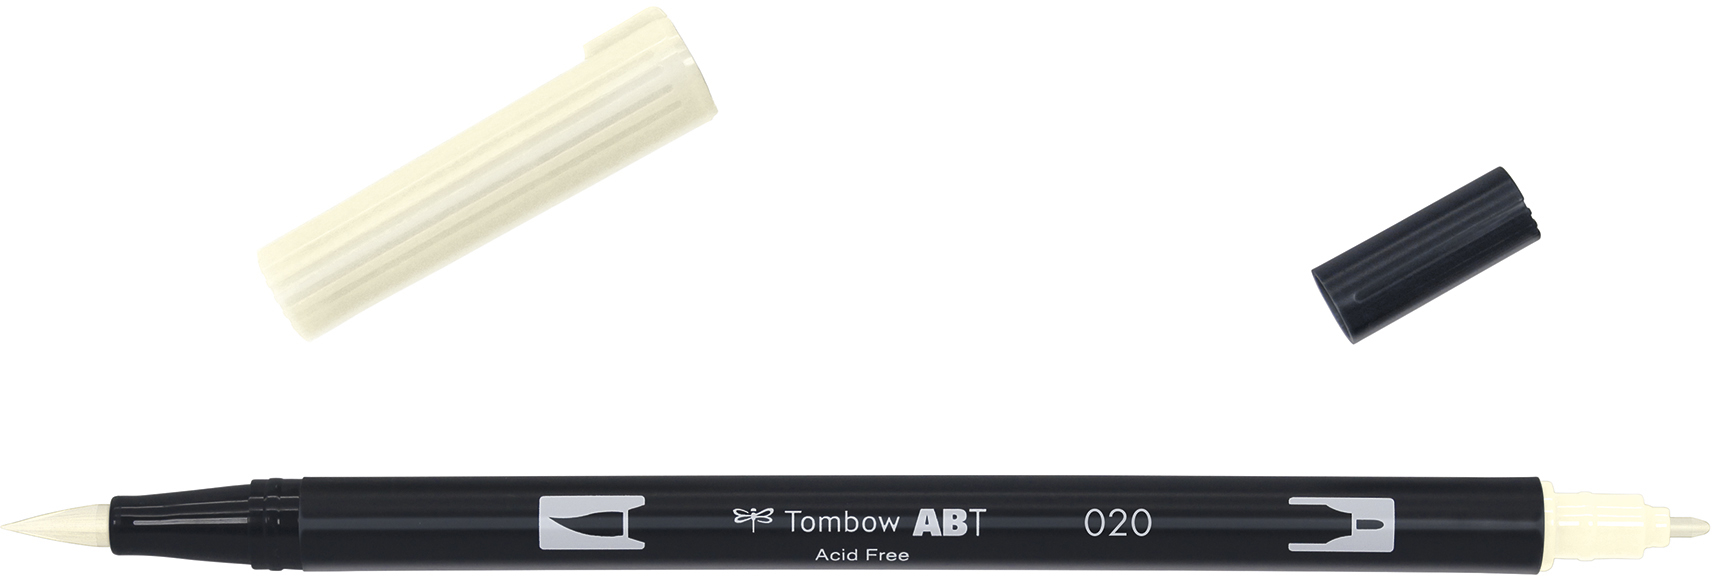 TOMBOW Dual Brush Pen ABT 020 peach